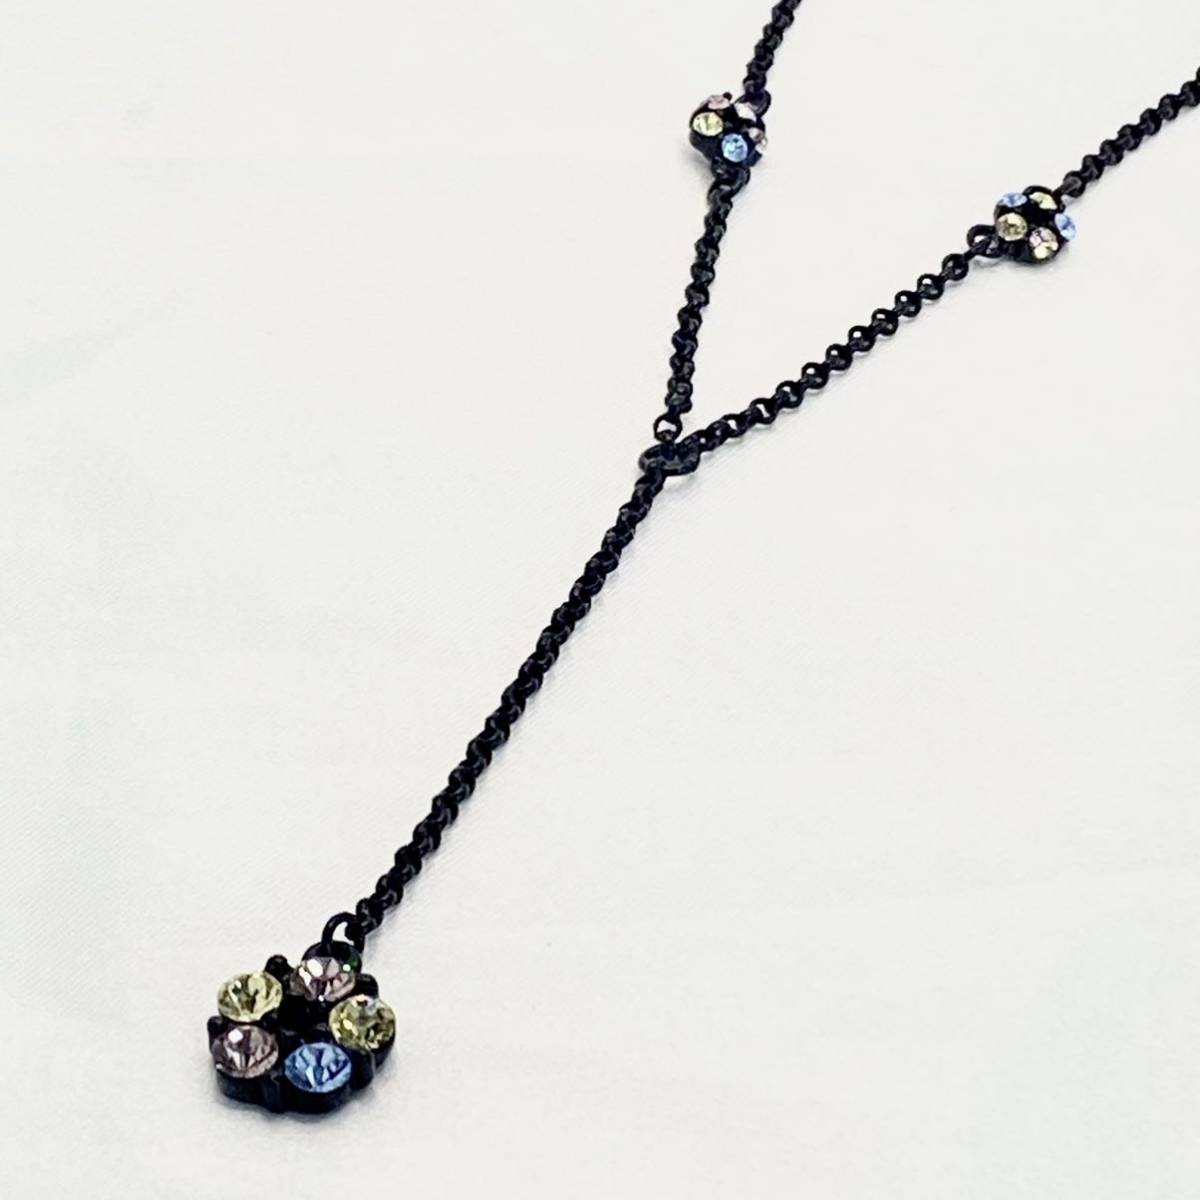  Agata AGATHA flower motif necklace rhinestone × black Vintage vintage antique accessory ornament 